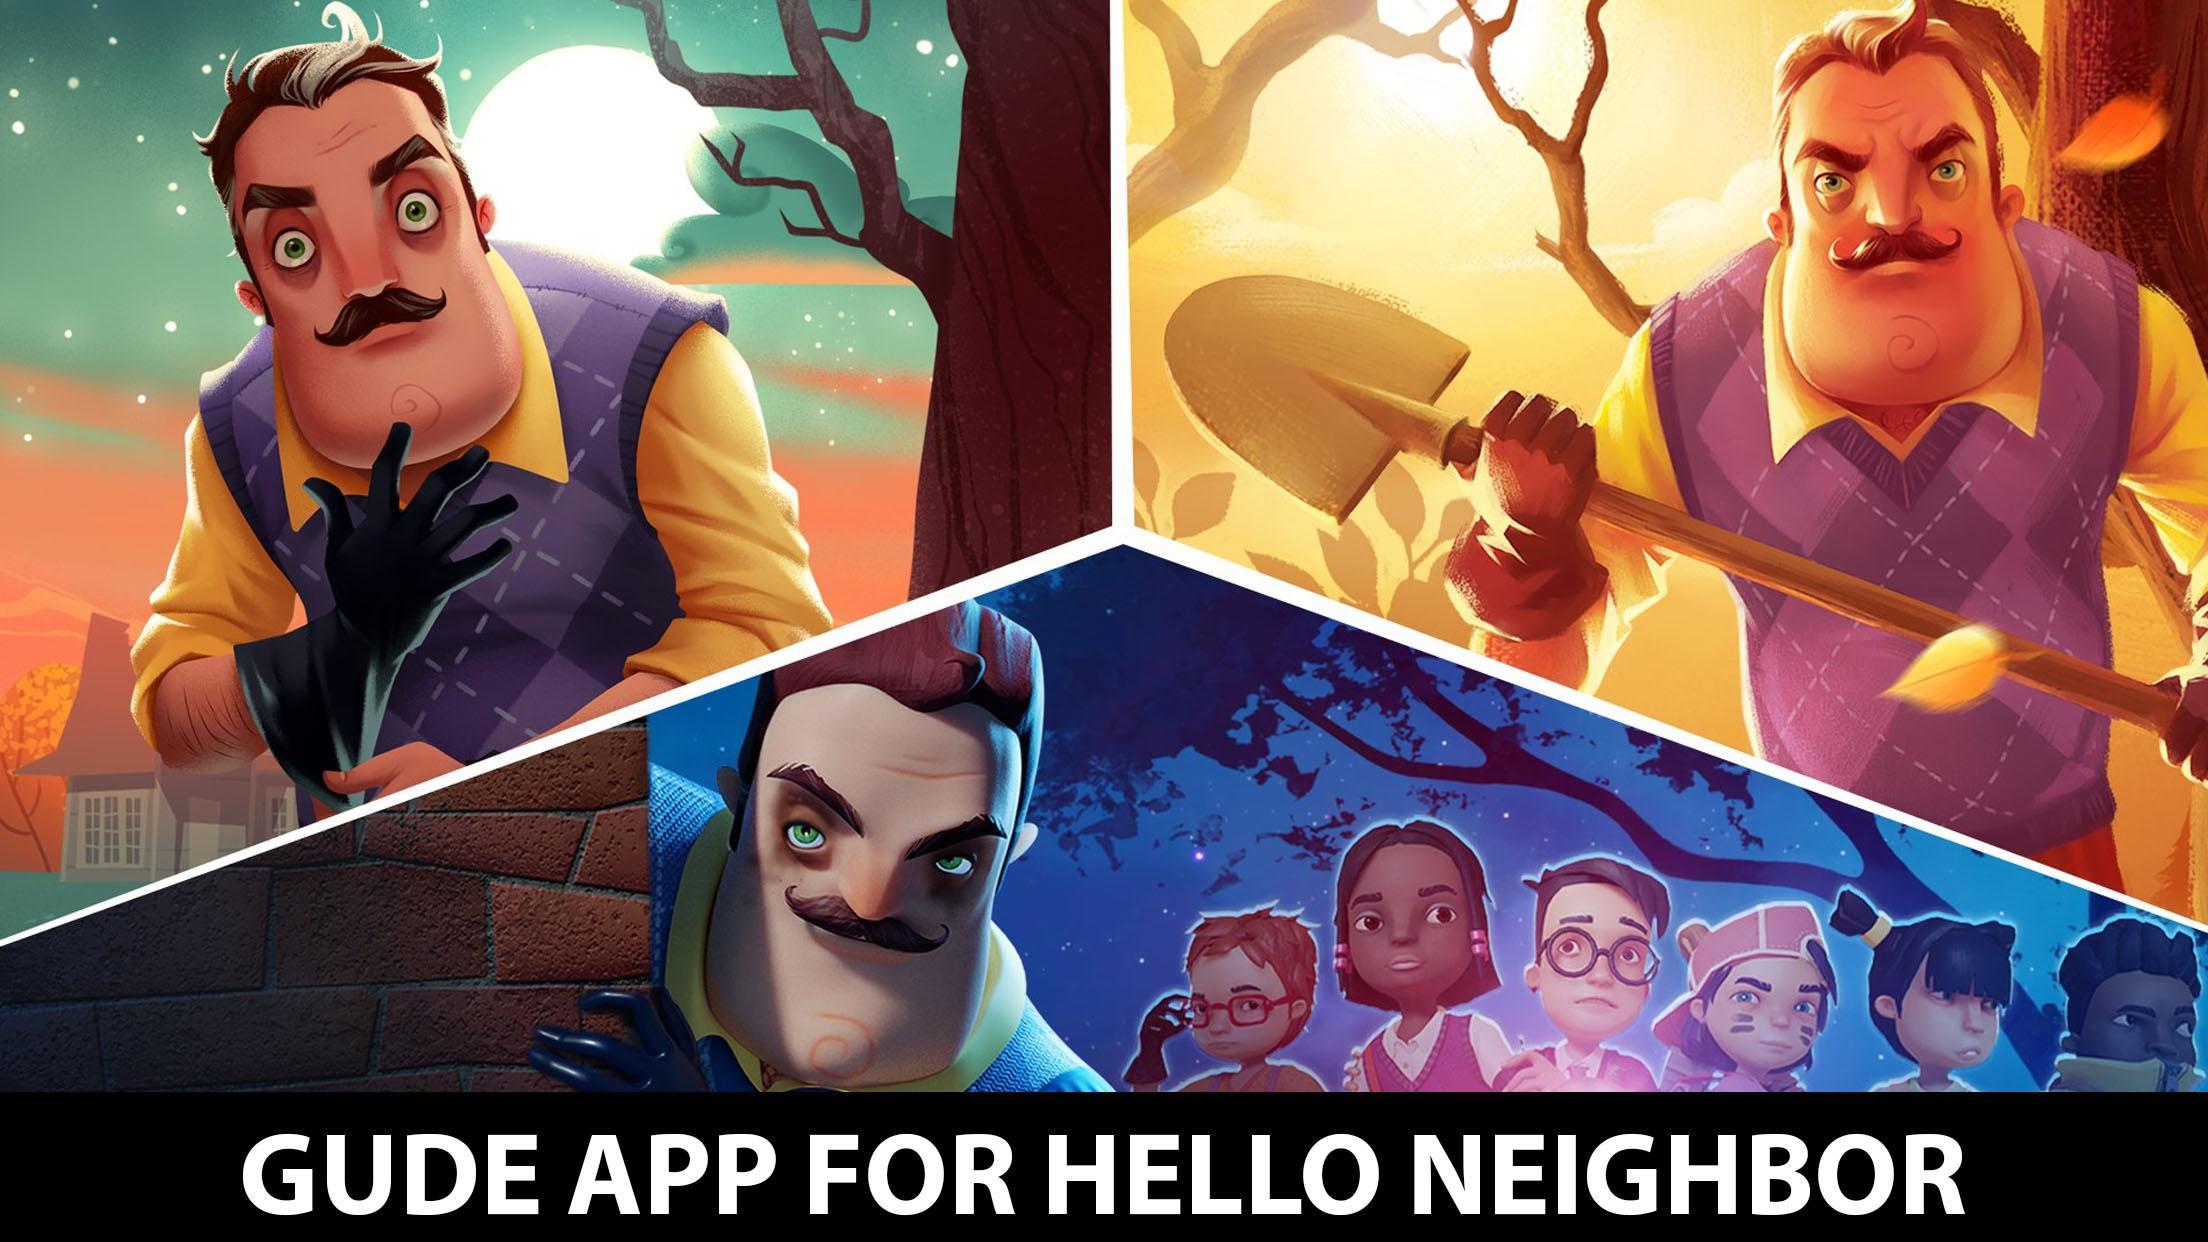 Сосед гости муж. Hello Neighbor игра. Квентин привет сосед. Игра привет сосед hello Neighbor игра. Привет сосед игры для PLAYSTATION 4.